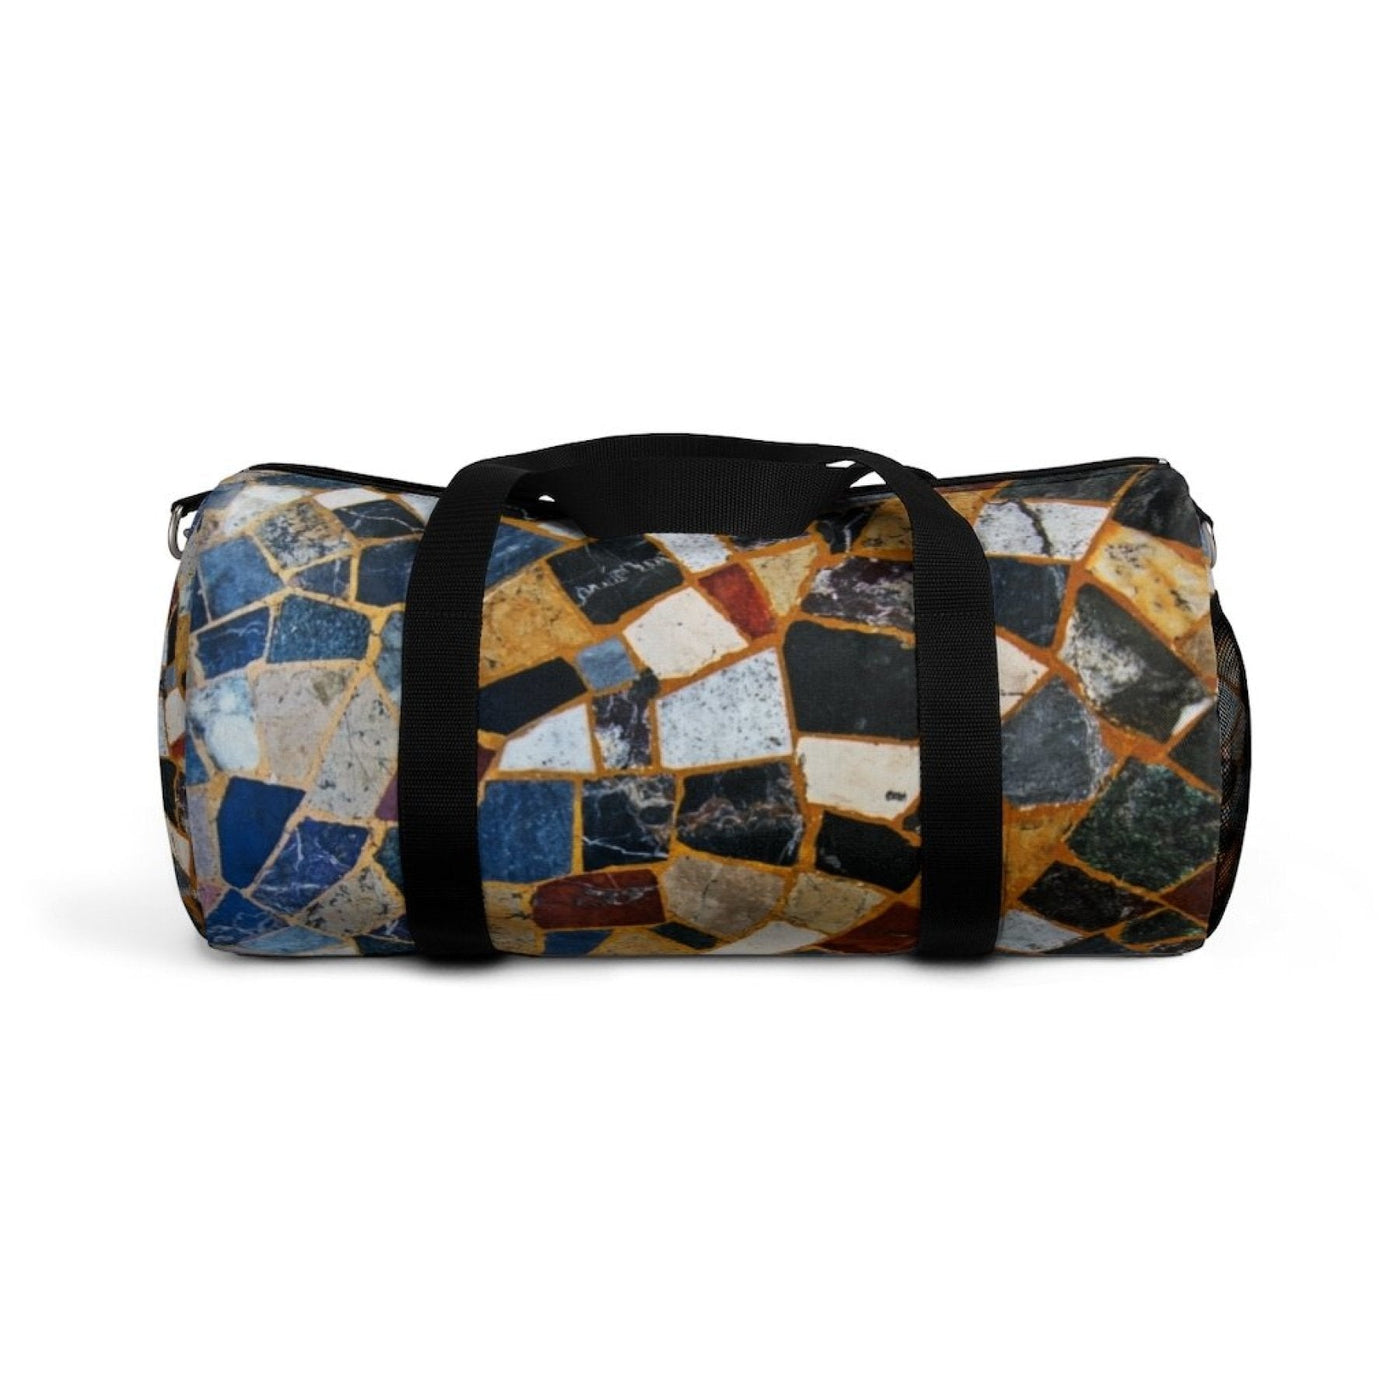 Duffel Bag Carry On Luggage Rustic Multicolor - Bags | Duffel Bags